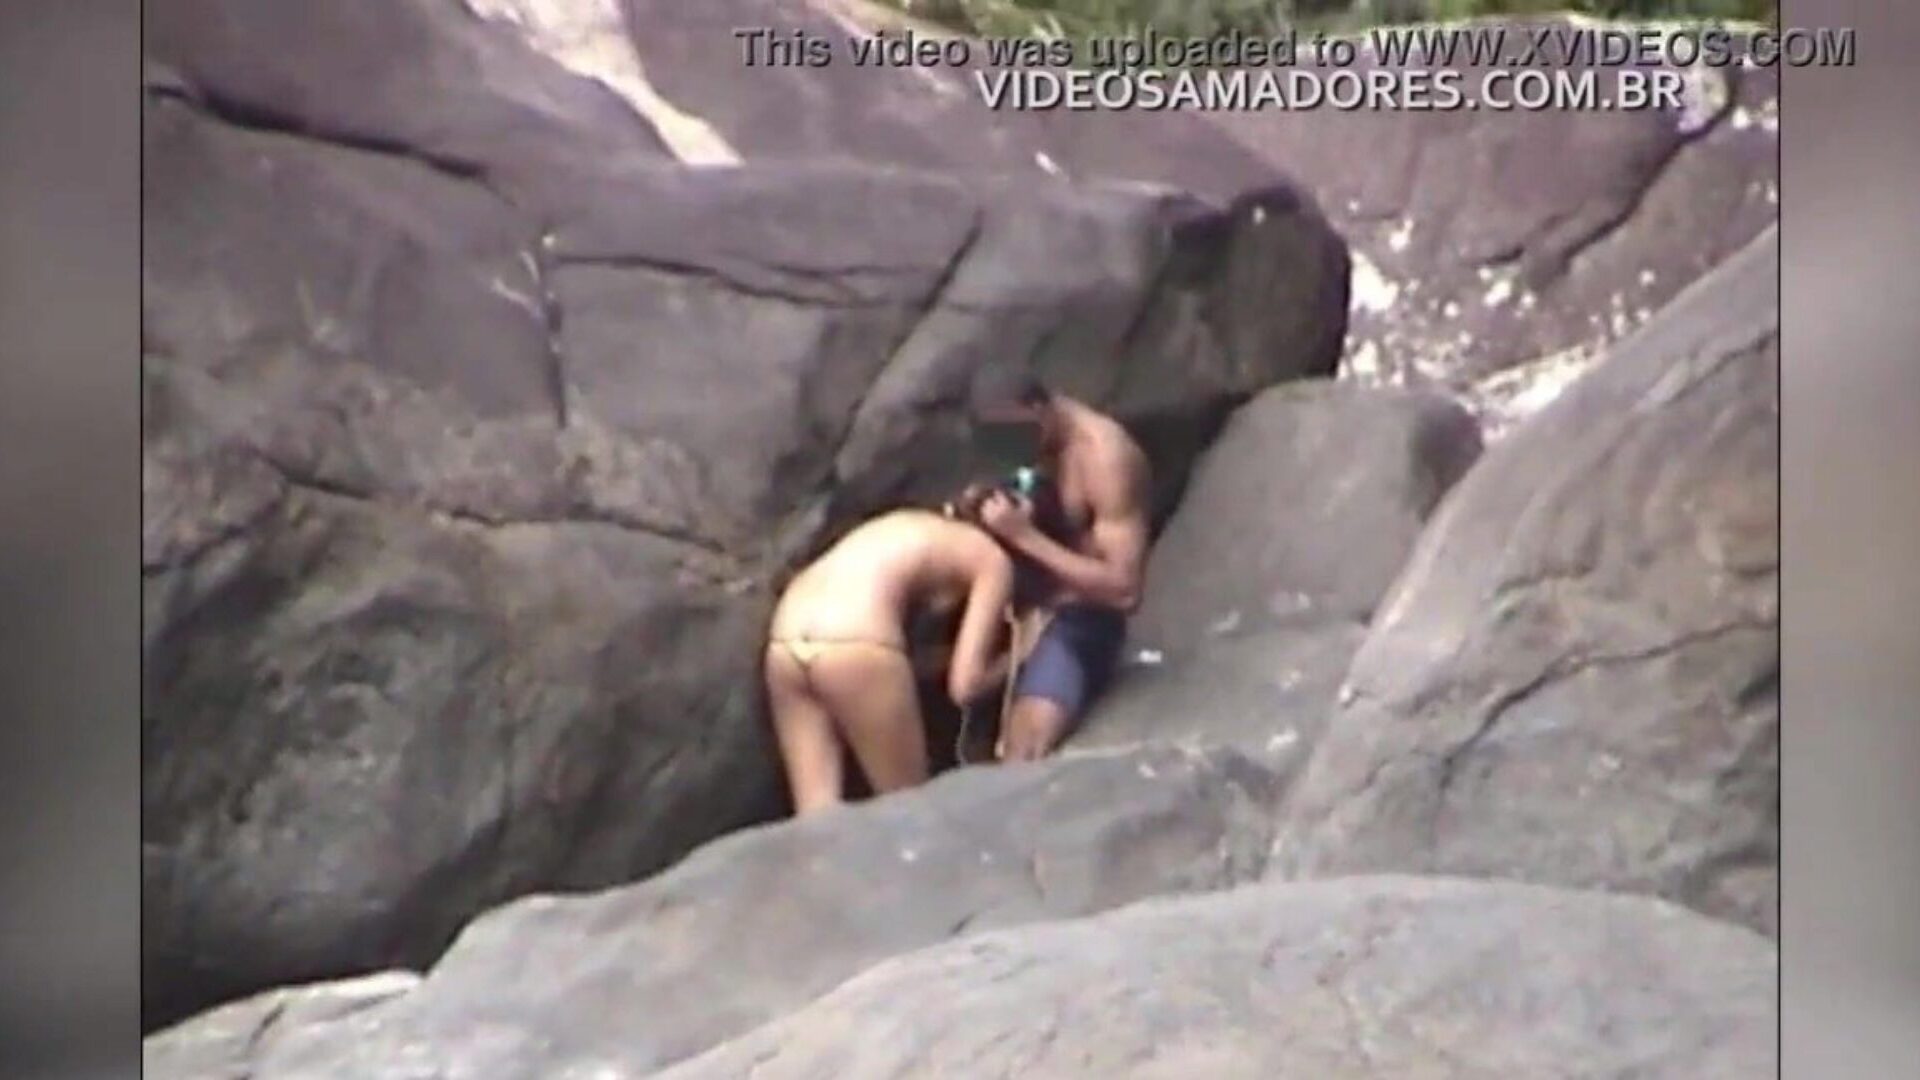 casal faz sexo oral na praia e é filmado sem perceber